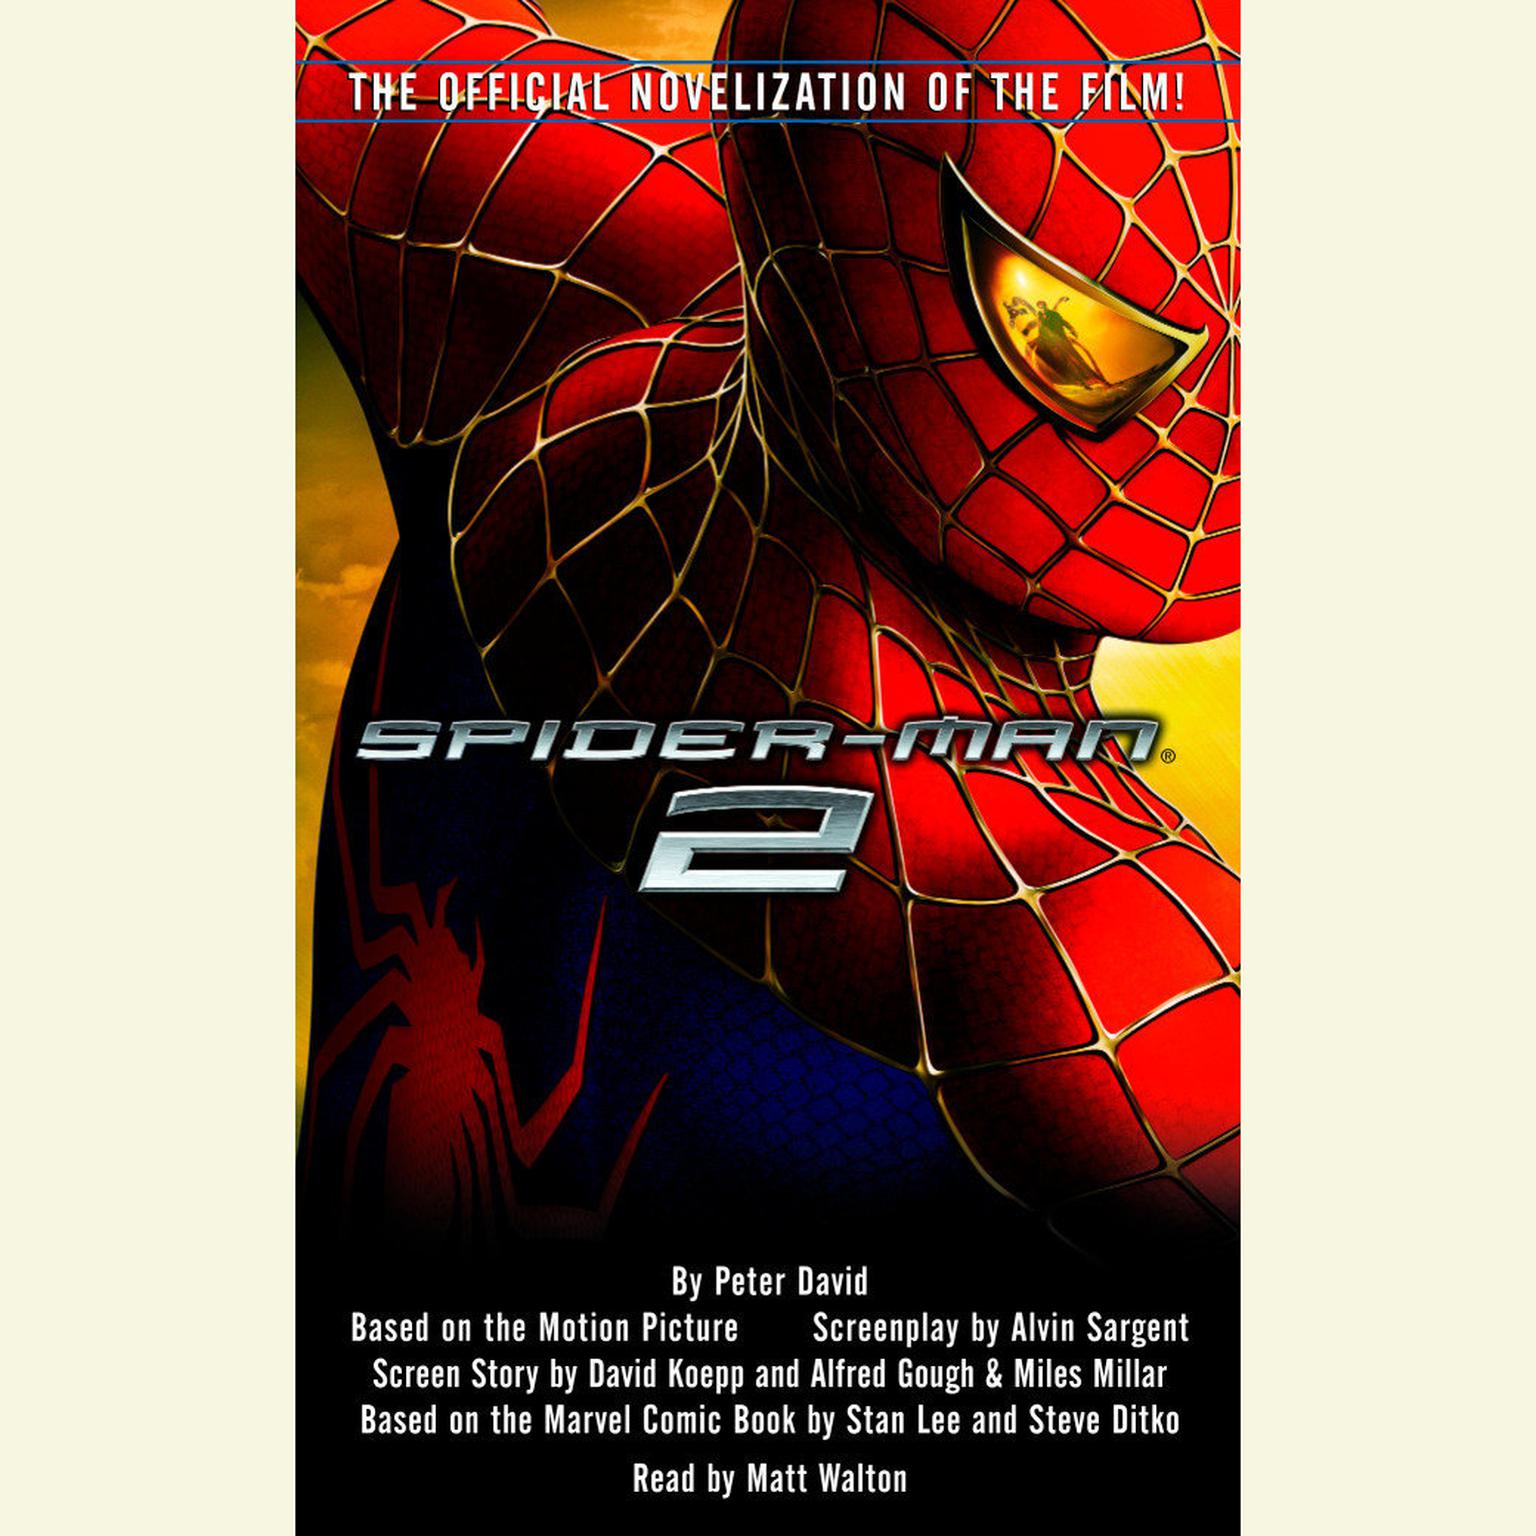 Spider-Man 2 (Abridged) Audiobook, by Peter David